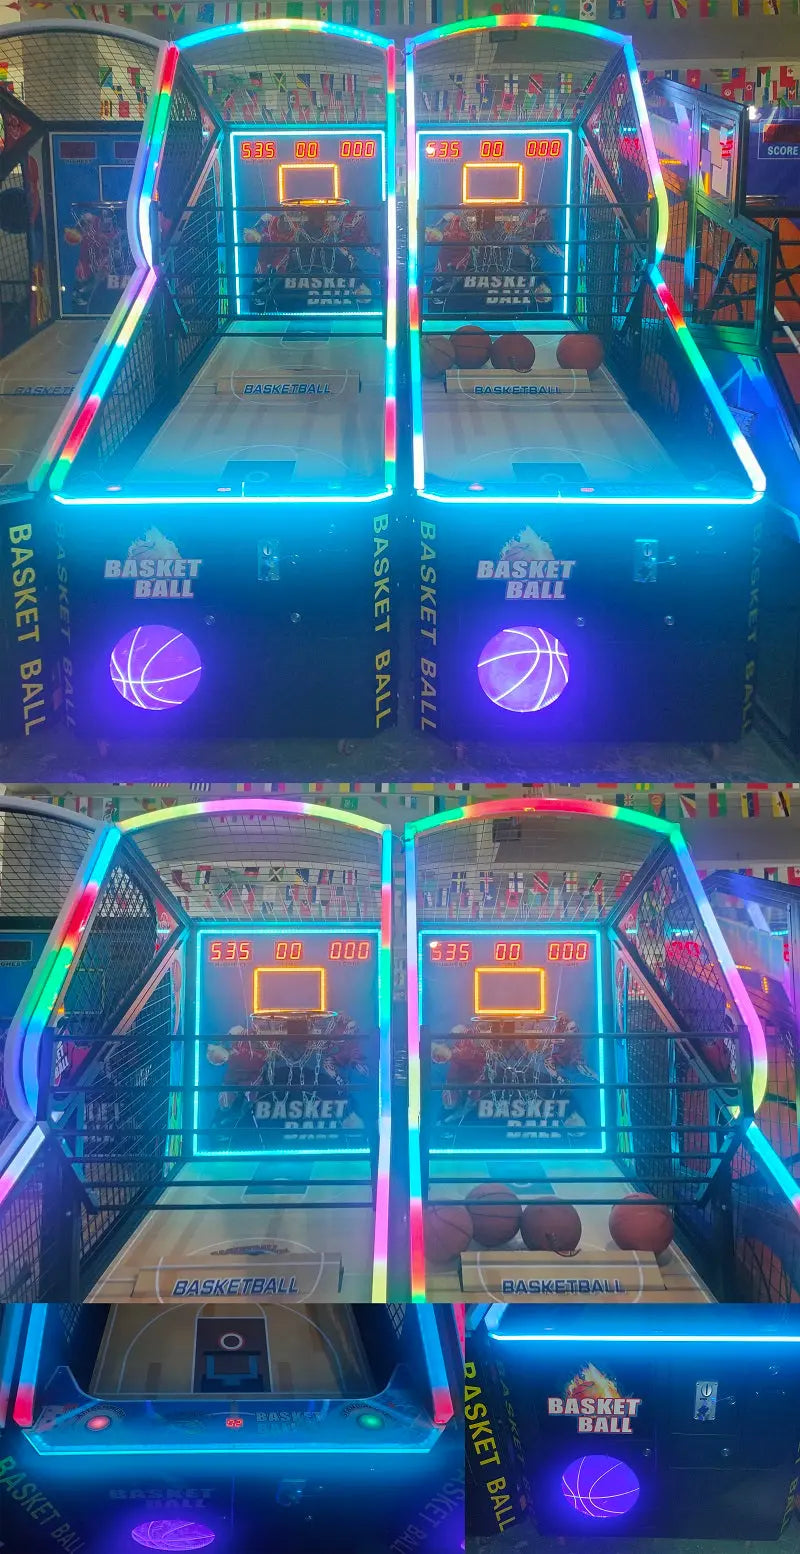 NBA-Basketball-game-Machine-Classic-5-Basketballs-Challenge-Arcade-games-Tomy-Arcade